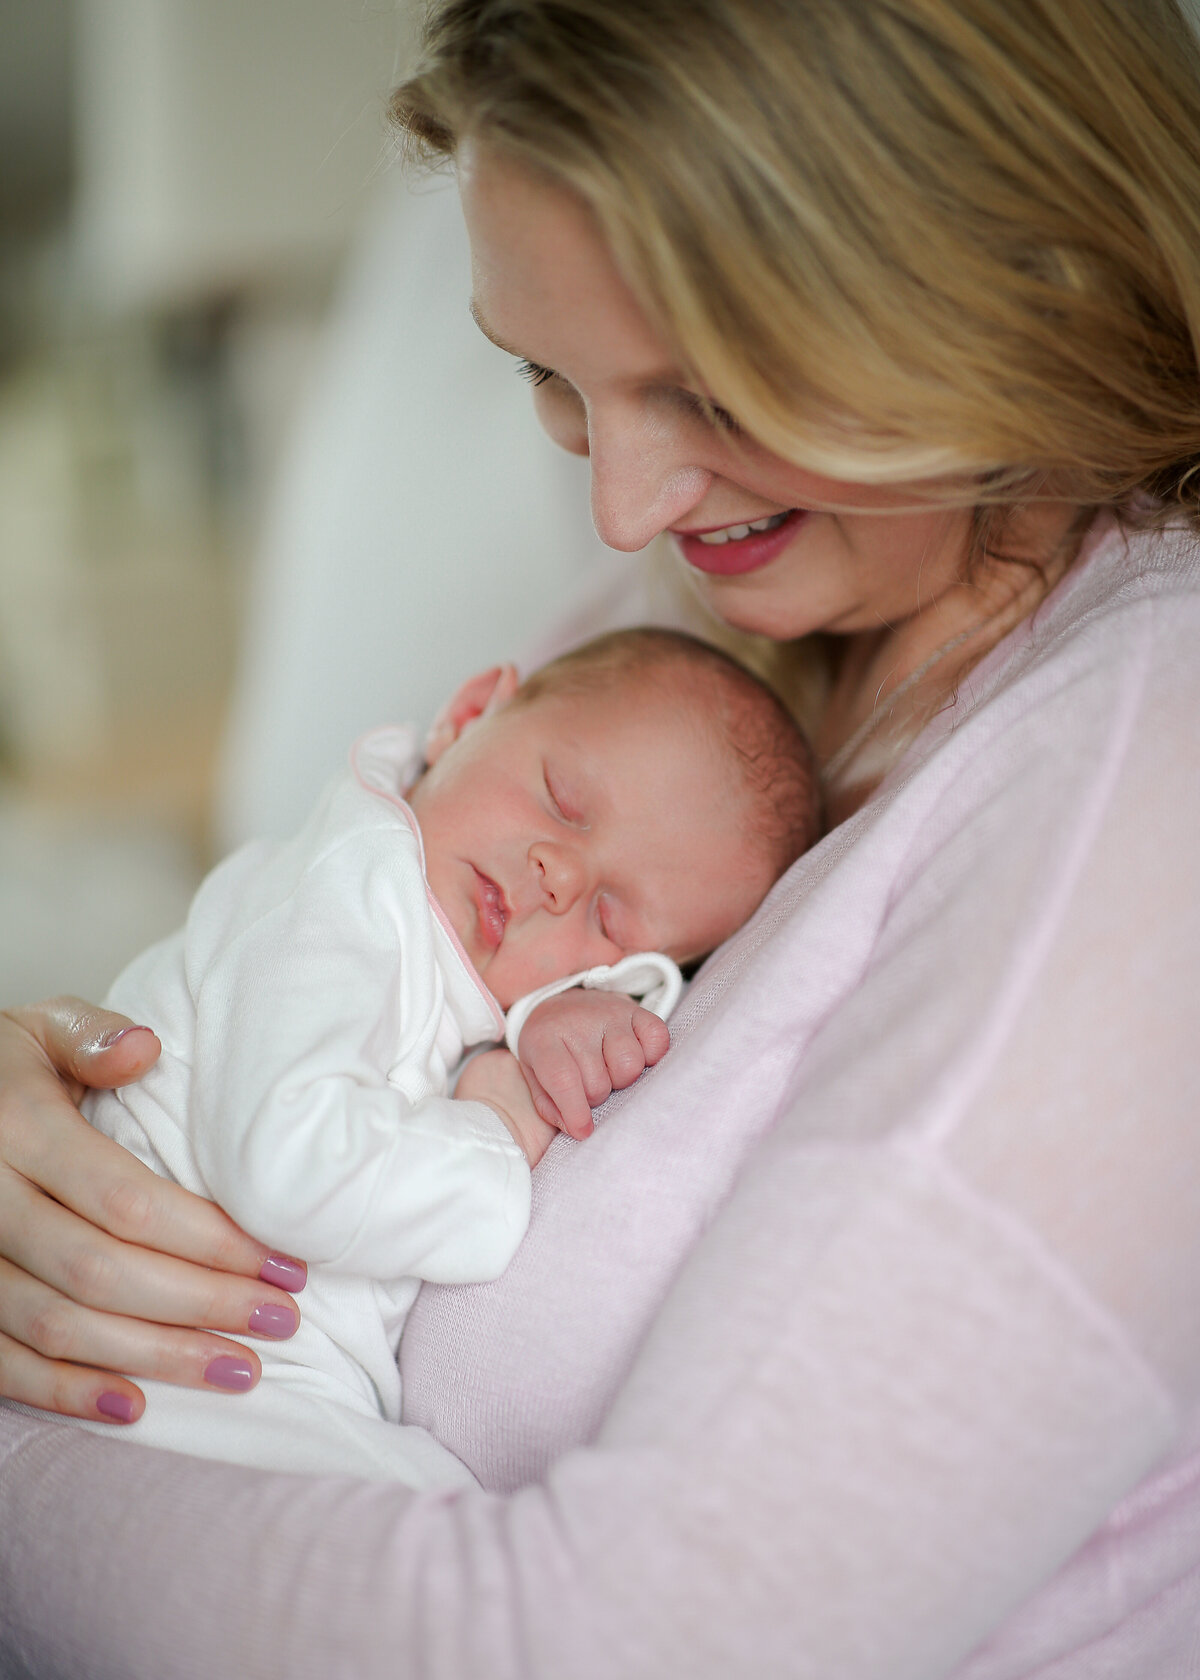 Vanessa is an experienced newborn photographer taking stunning new parent portraits